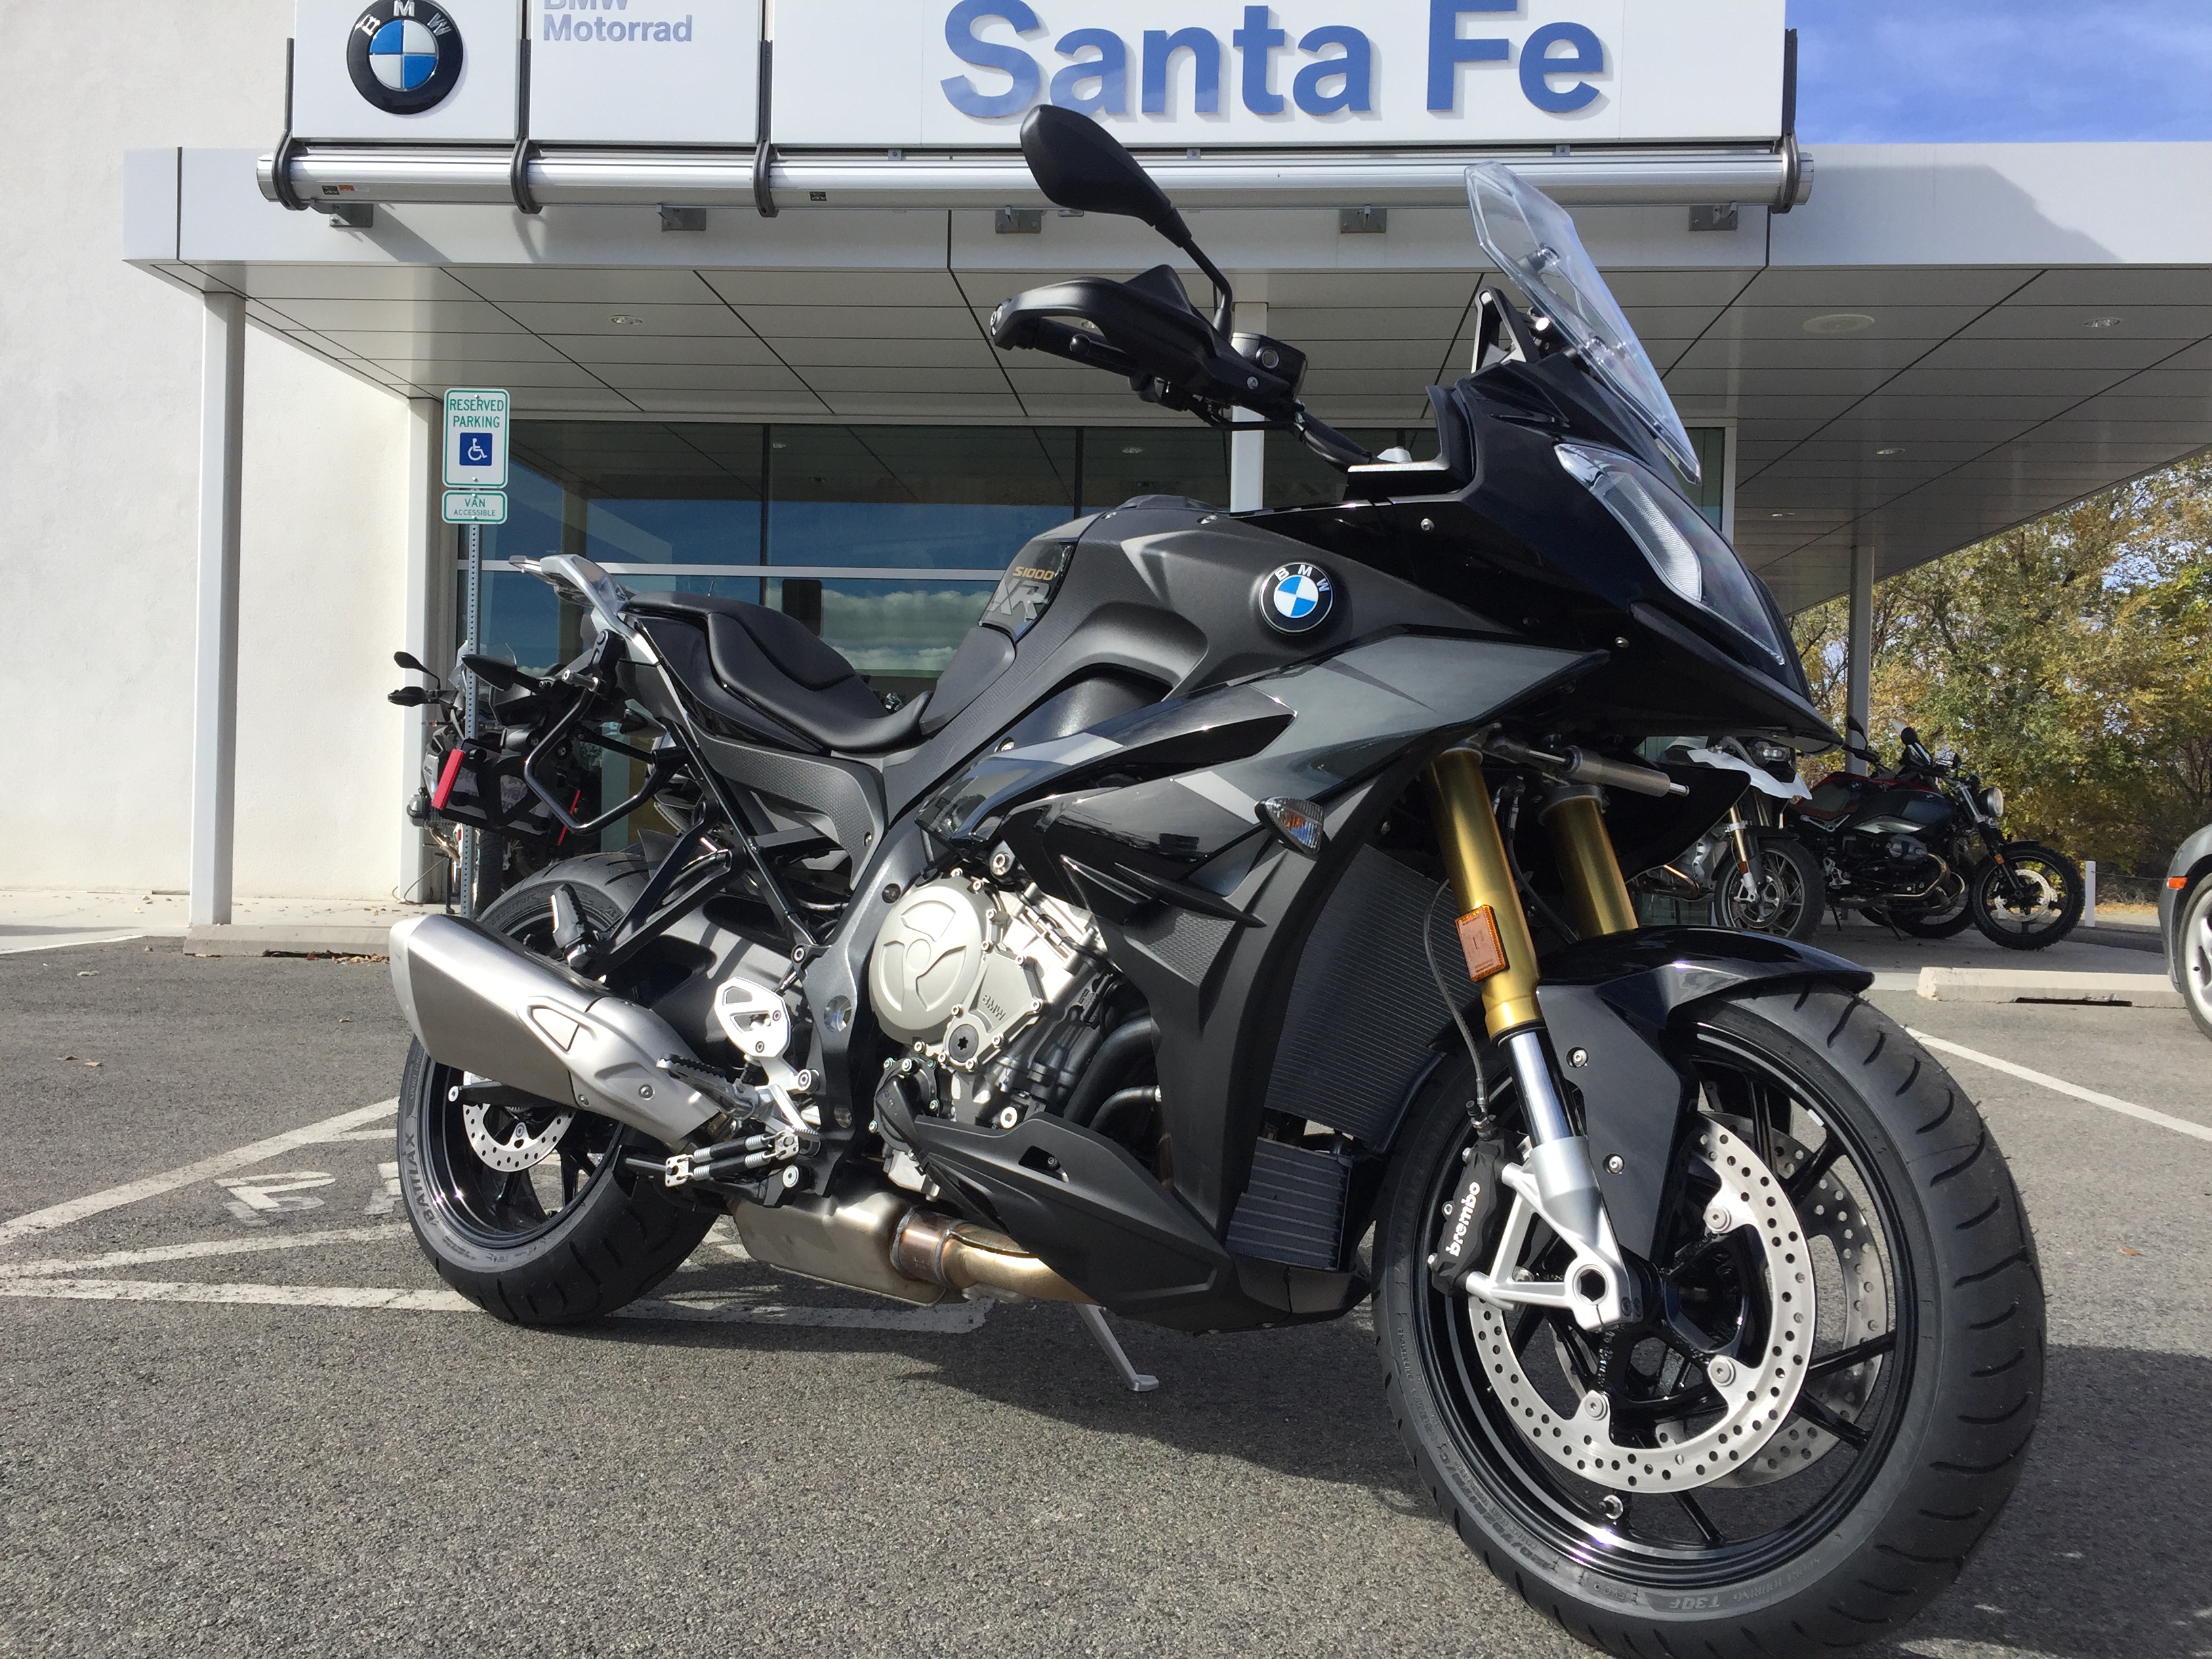 New BMW Motorcycles - S1000XR | Santa Fe BMW Motorcycles | Santa Fe, NM